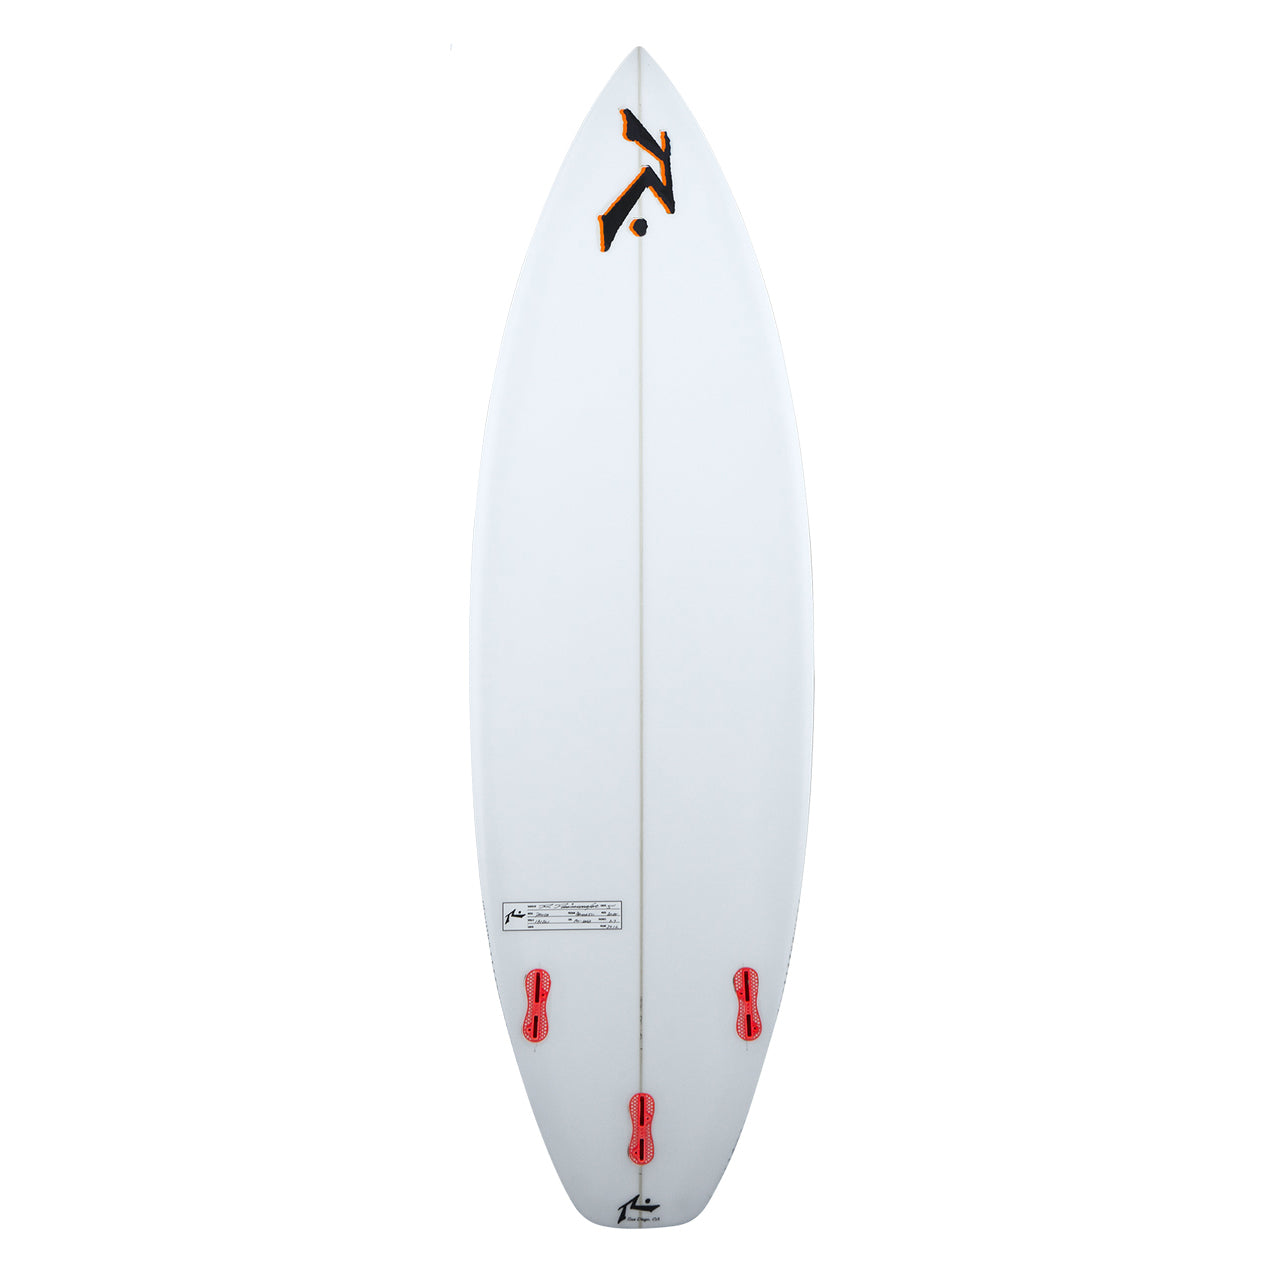 Panda - High Performance Shortboard - Rusty Surfboards - Top View